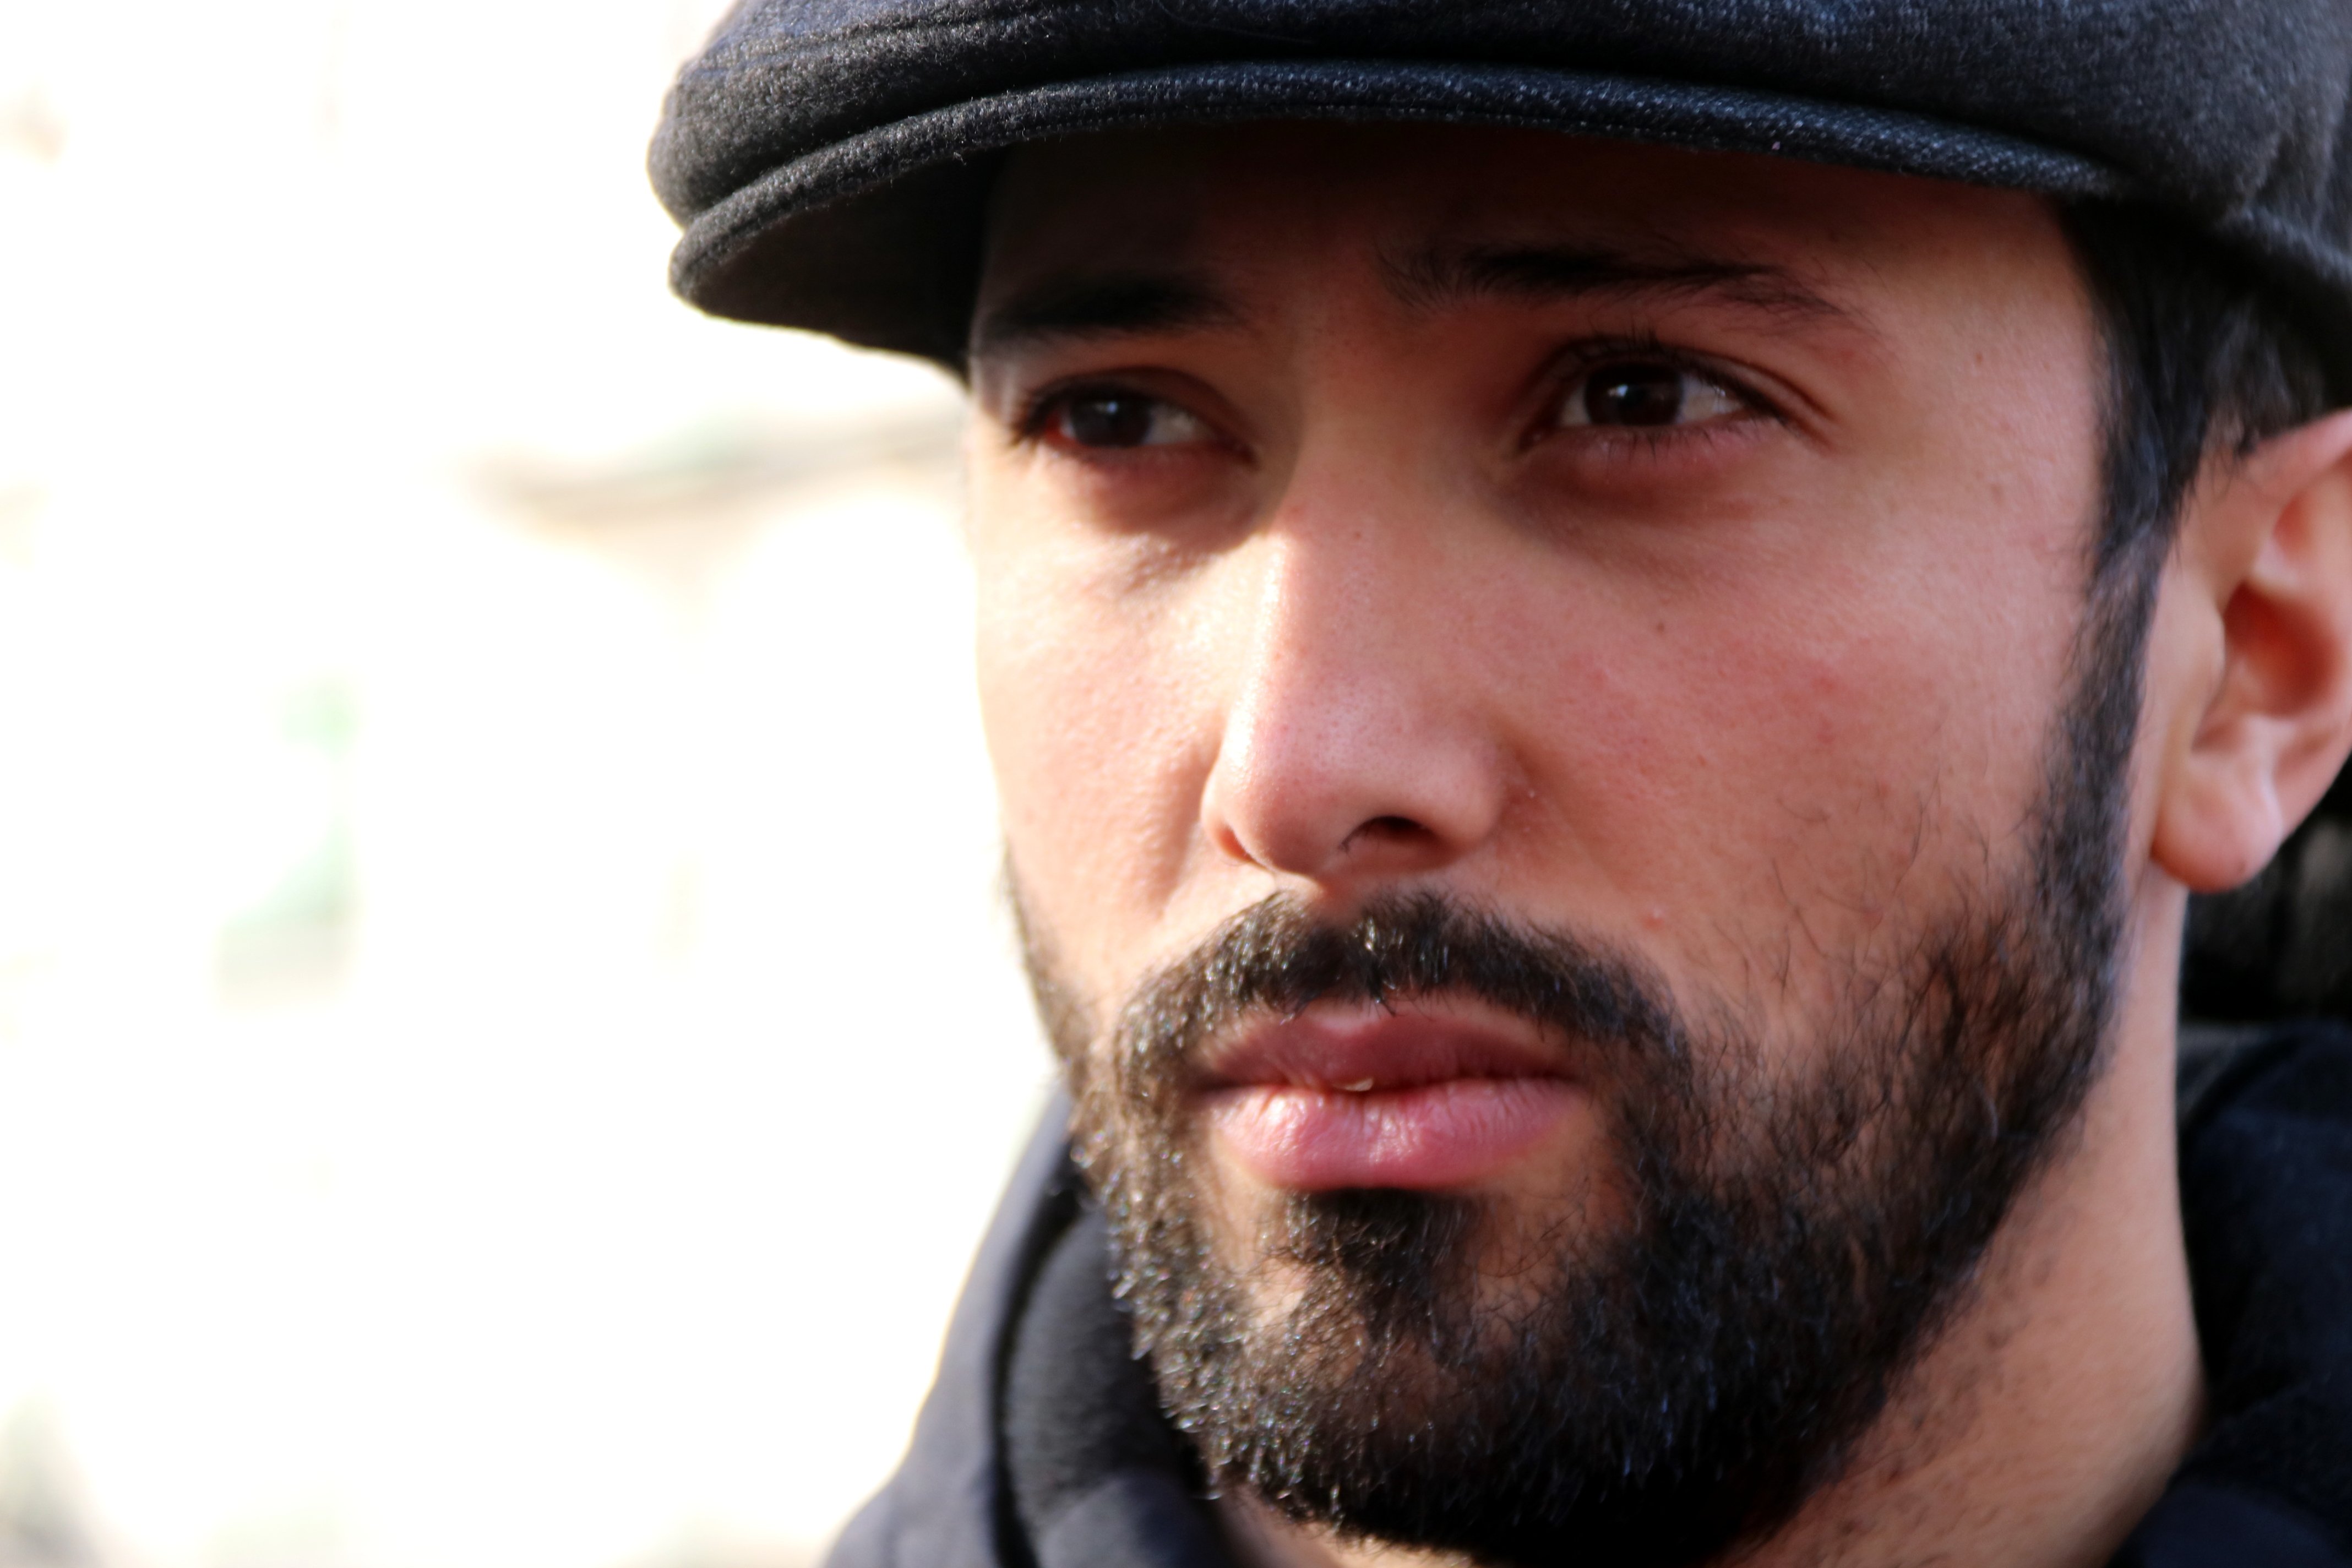 Mallorcan rapper Valtònyc persuades Belgian justice to strike out royal slander law